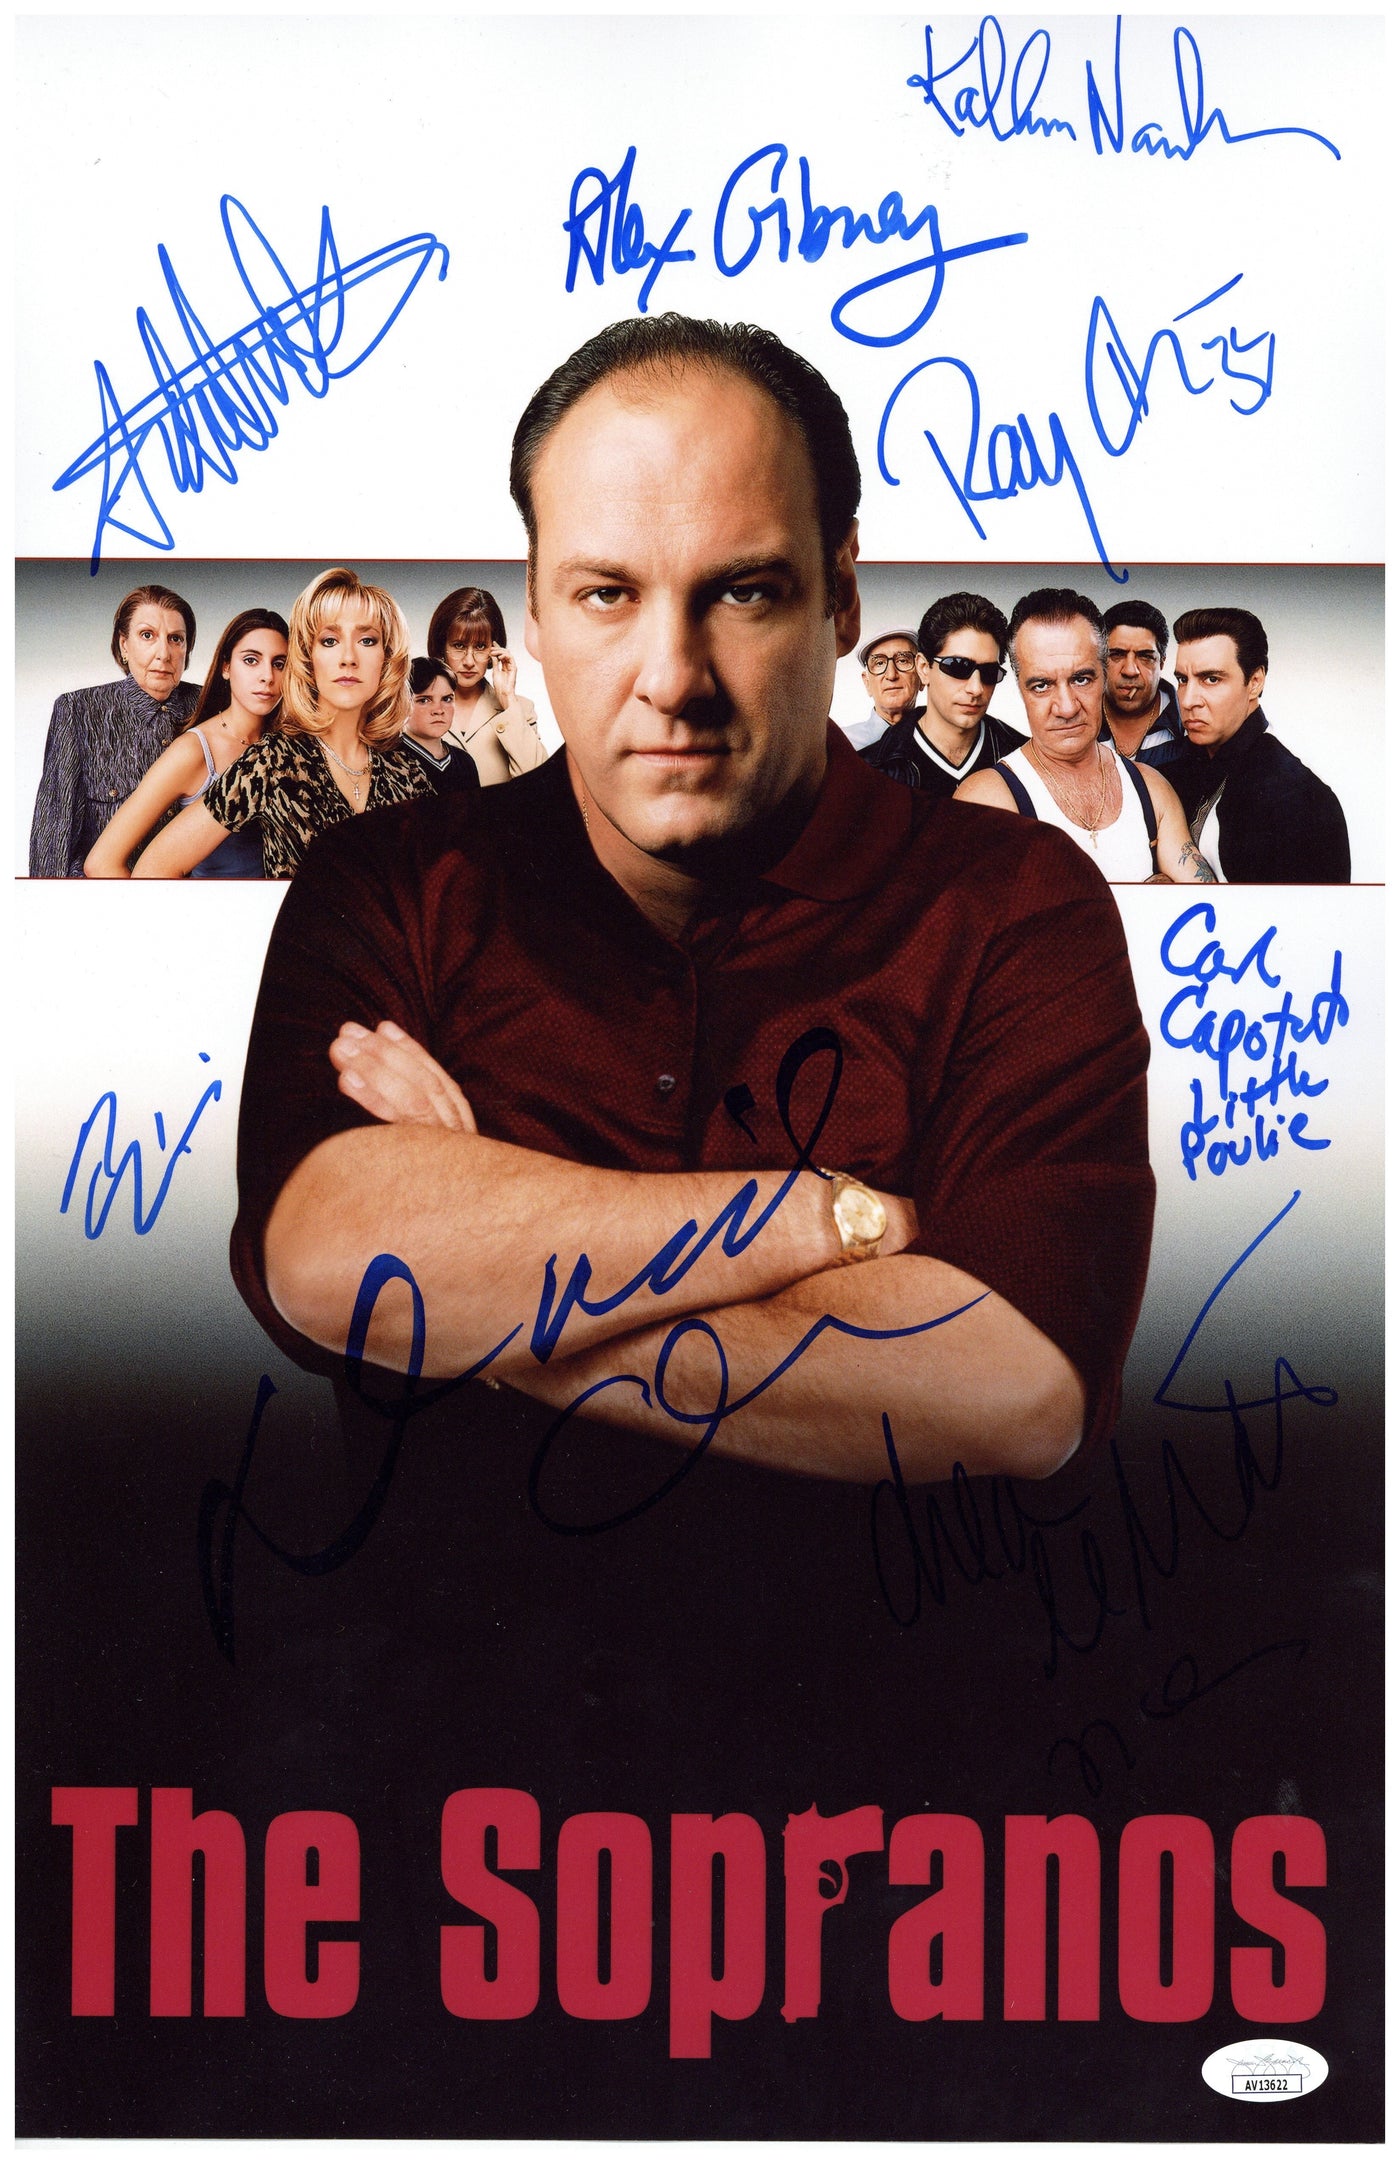 Sopranos Cast Signed 11x17 Photo Signed by 9 Autographed JSA COA #2